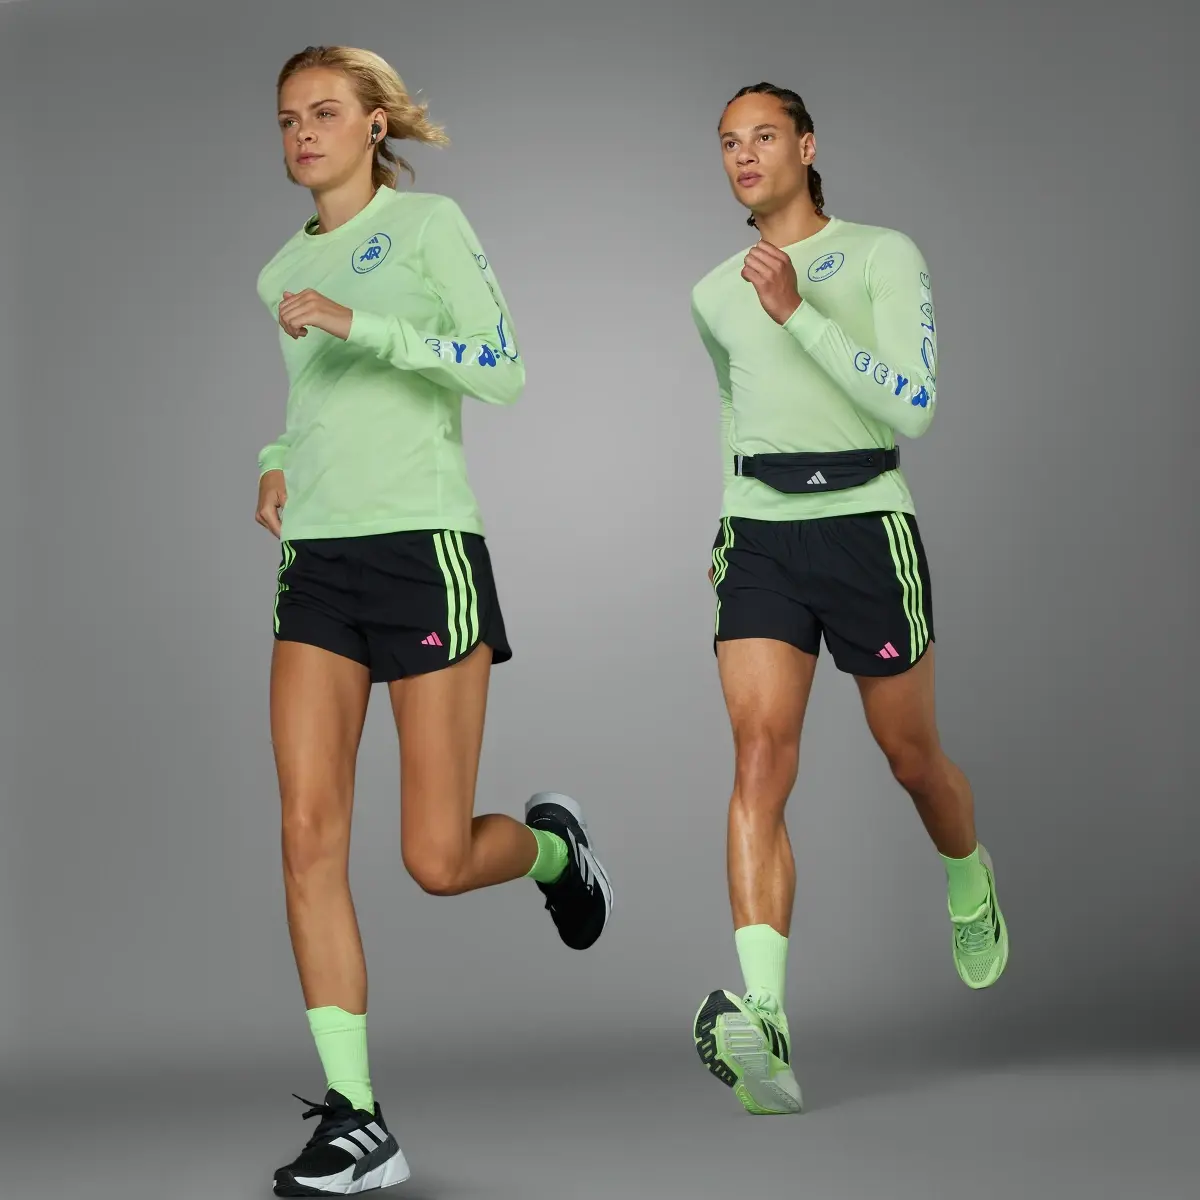 Adidas Own the Run adidas Runners Long Sleeve Long-Sleeve Top (Gender Neutral). 1